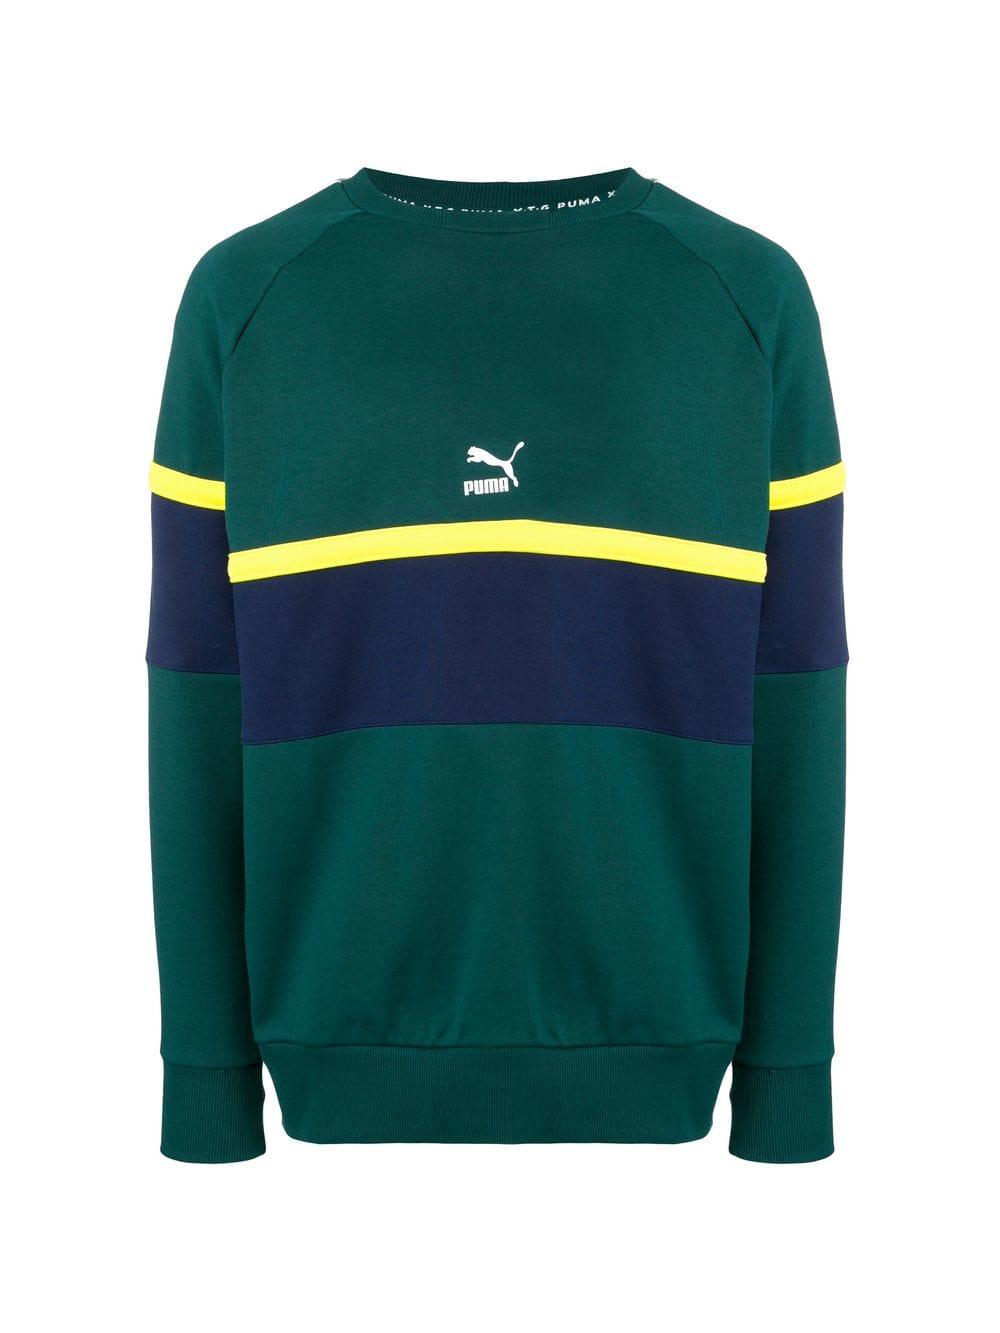 puma green sweater